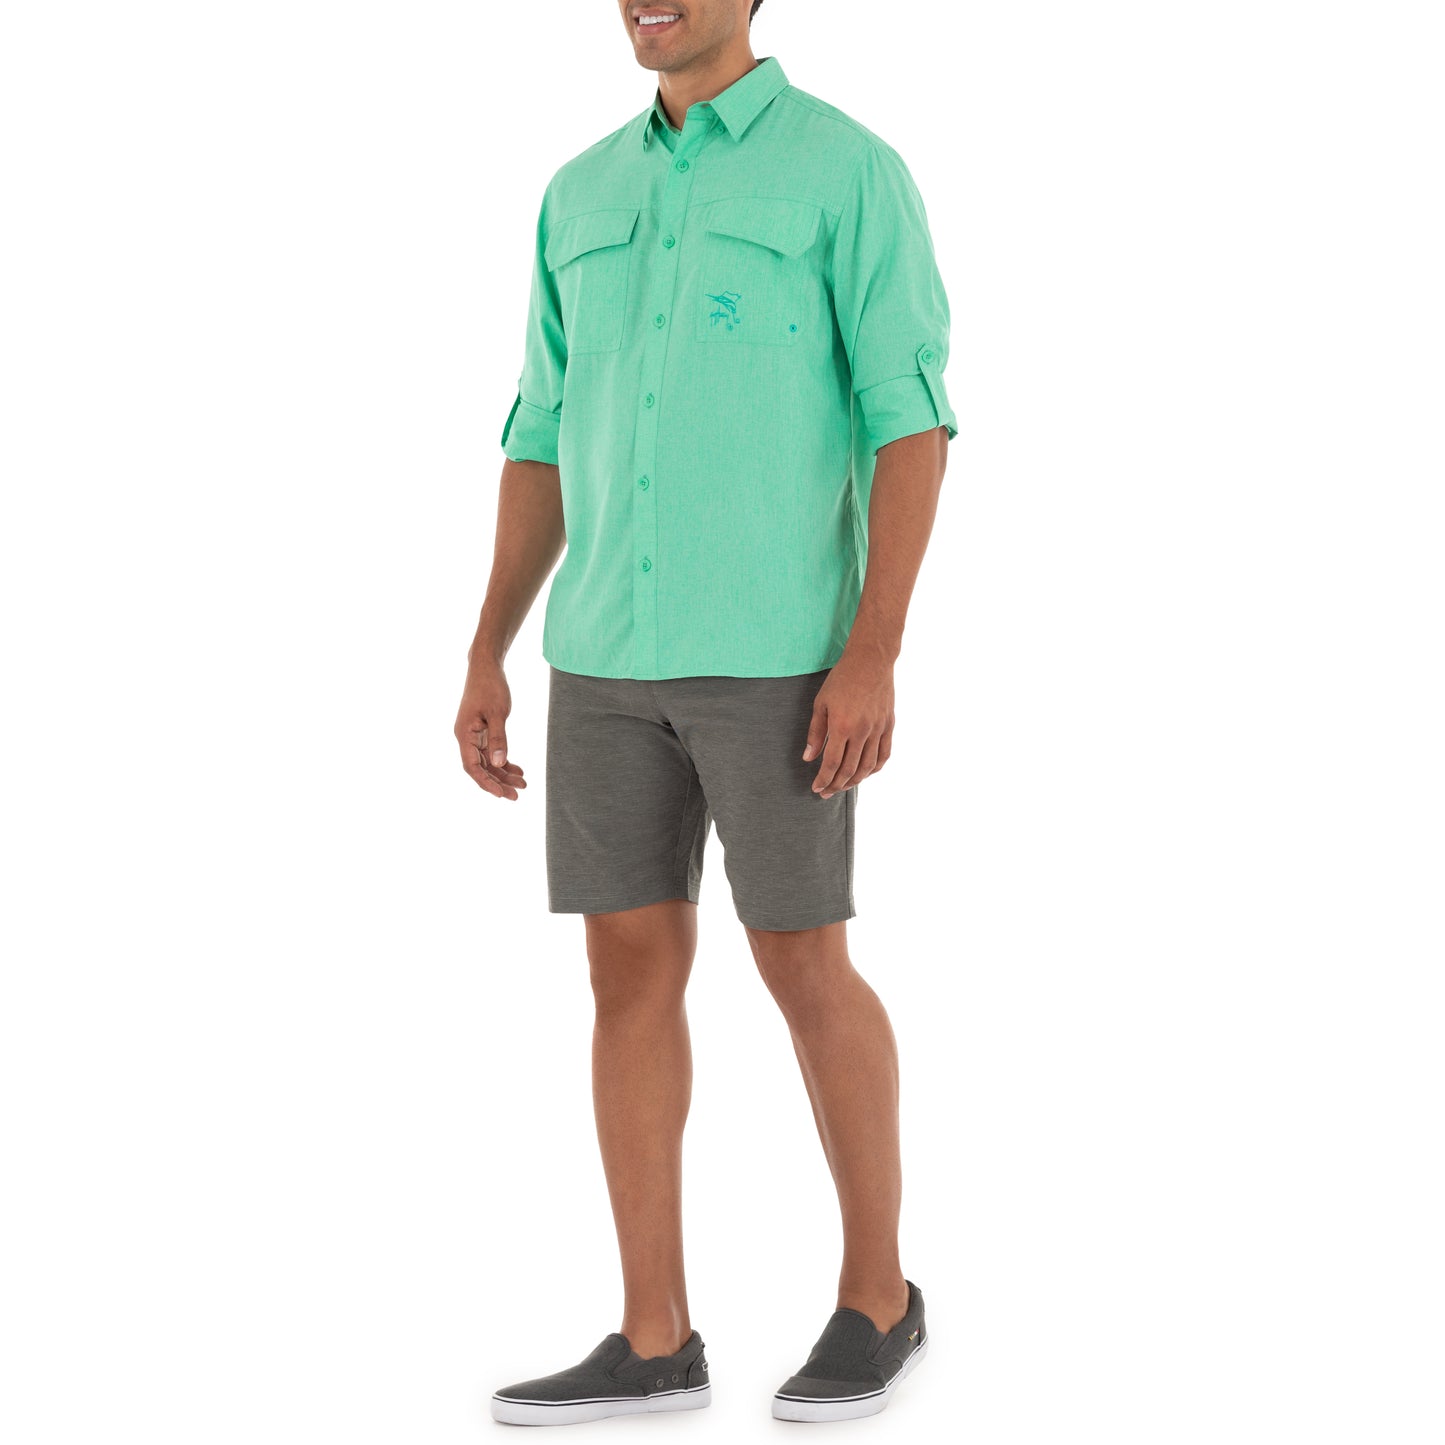 Men's Long Sleeve Heather Textured Cationic Green Fishing Shirt View 8